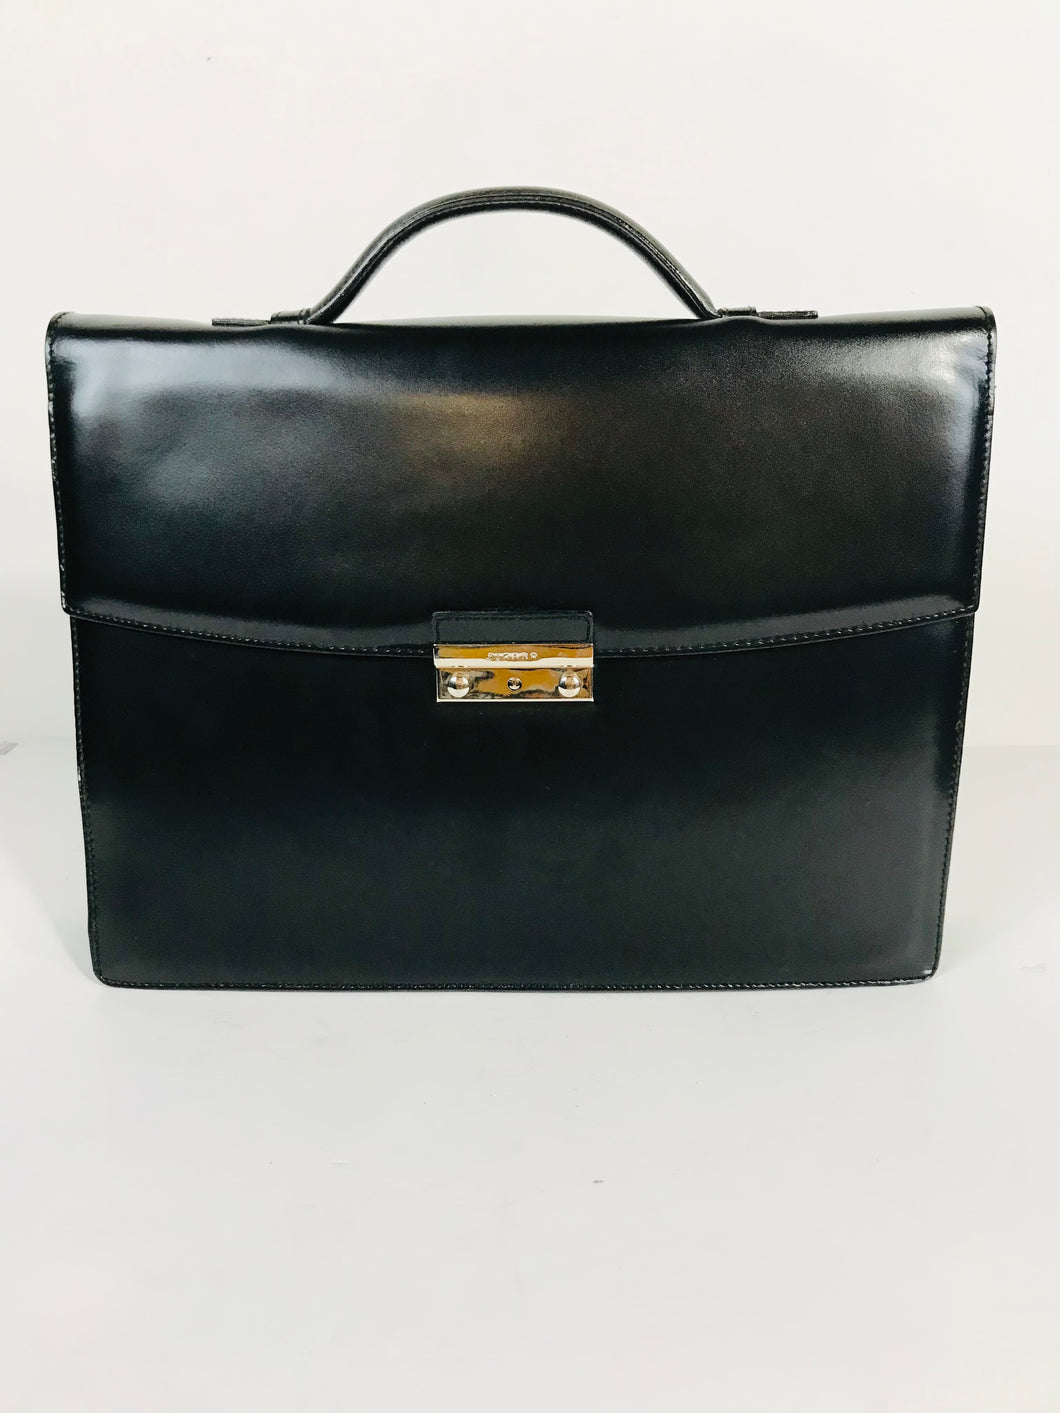 Picard Men's Leather Briefcase Tote Bag | Large | Black